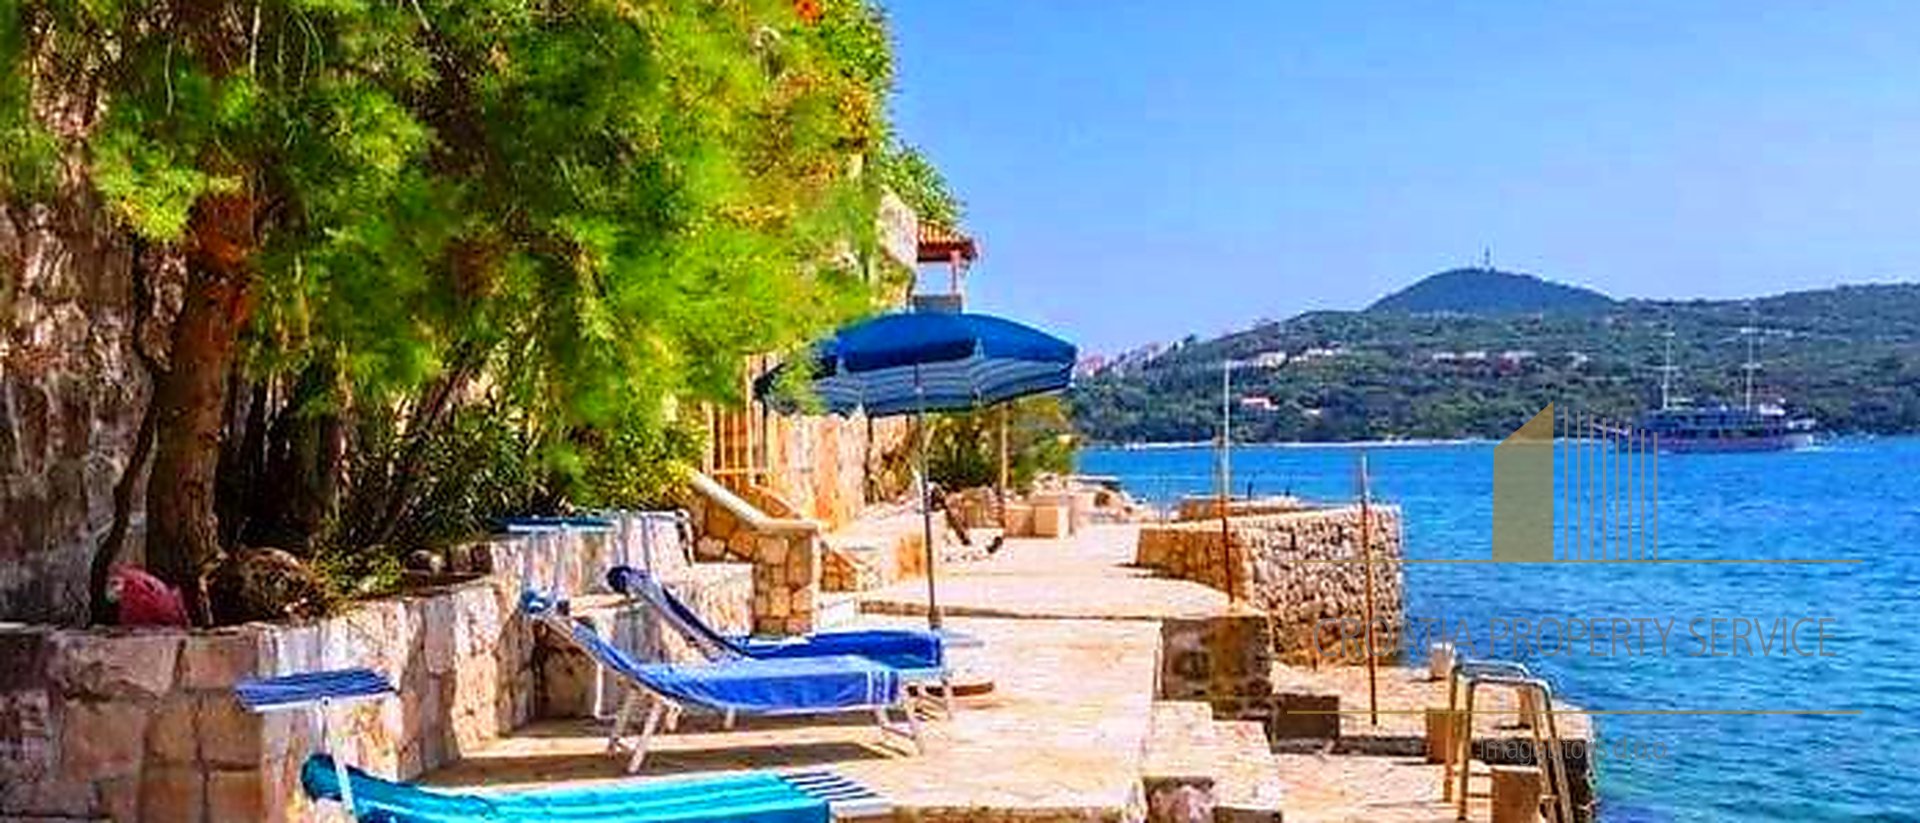 Kamnita hiša na ekskluzivni lokaciji, prvi red do morja v Dubrovniku!